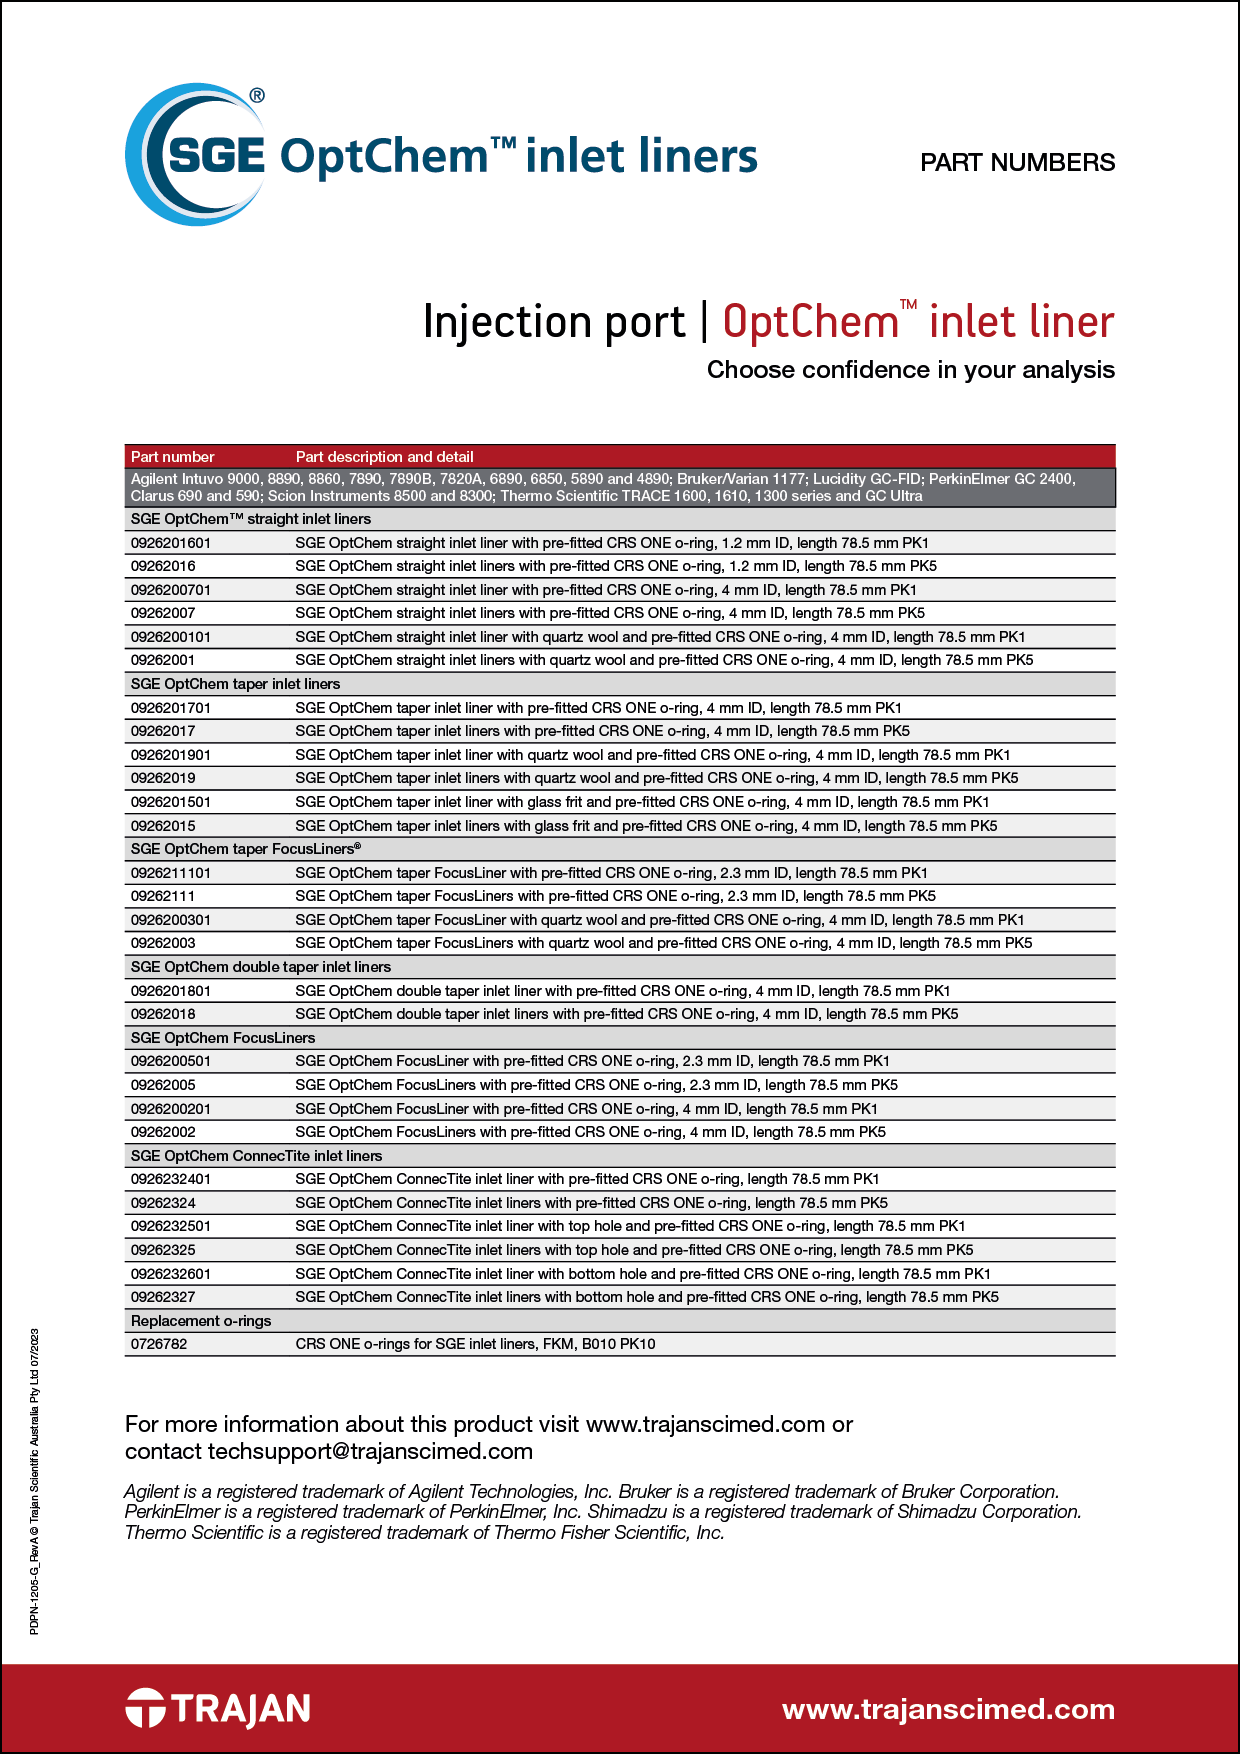 Part Number List - SGE OptChem inlet liners